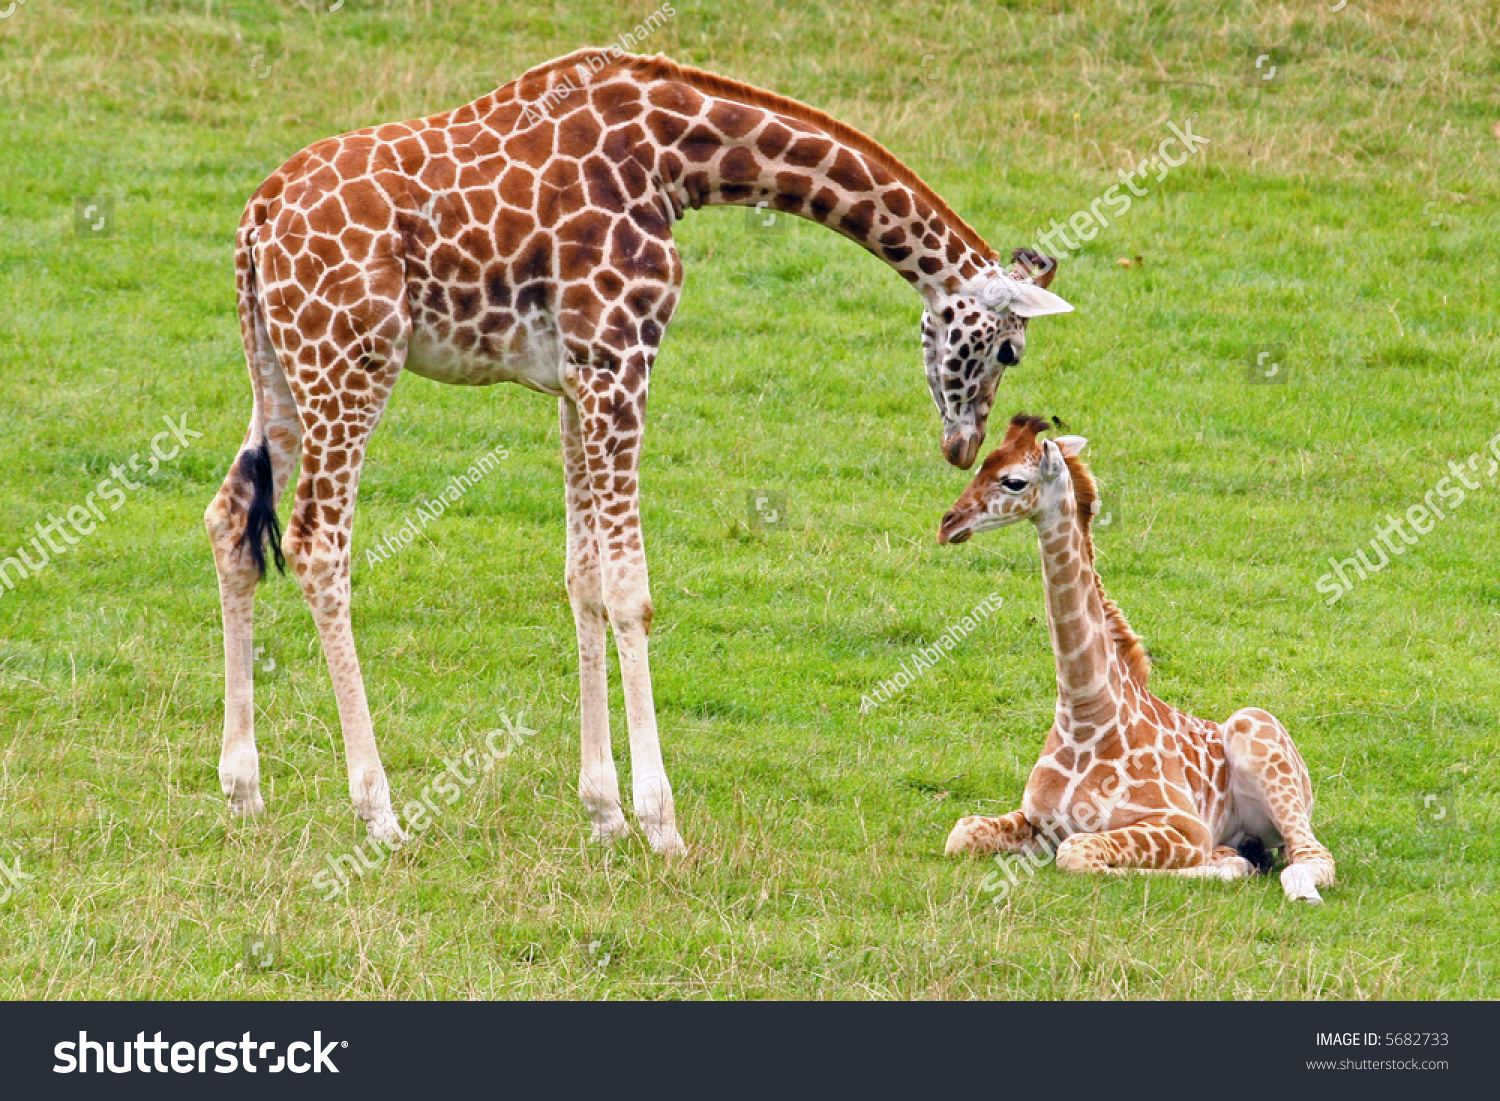 Animals en. Жираф жирафиха Жирафенок. Жираф с детенышем. Детеныш жирафа. Маленькие Жирафы.